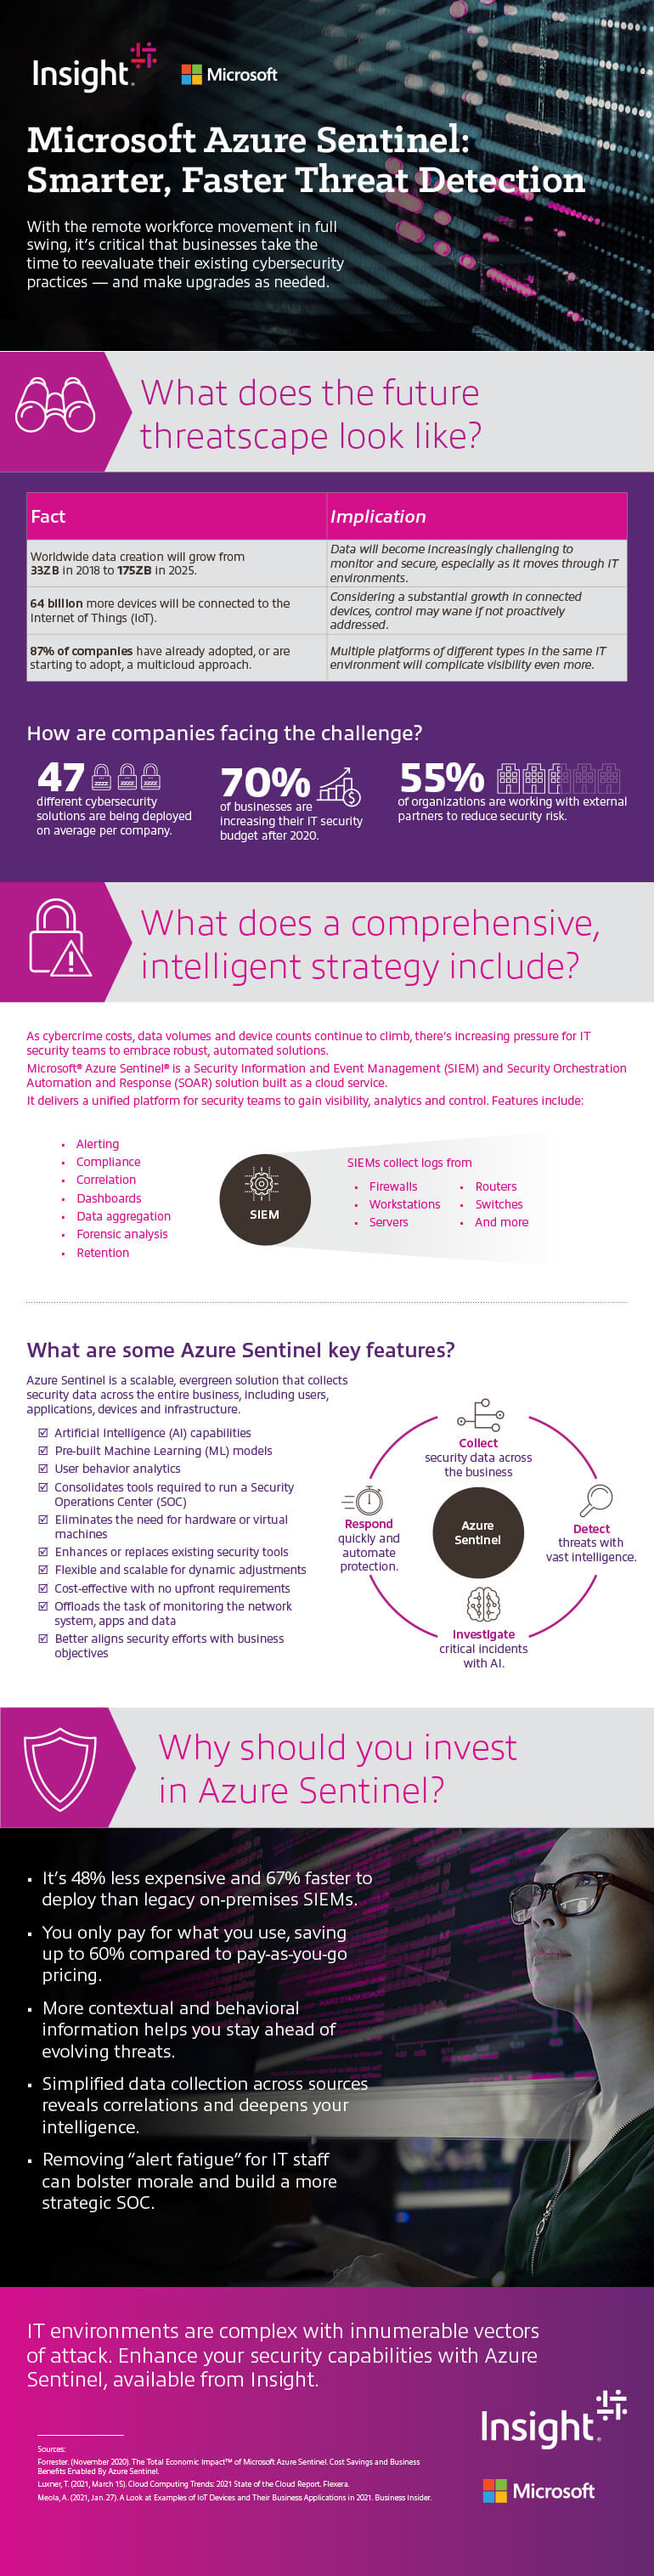 Microsoft Azure Sentinel: Smarter, Faster Threat Detection infographic